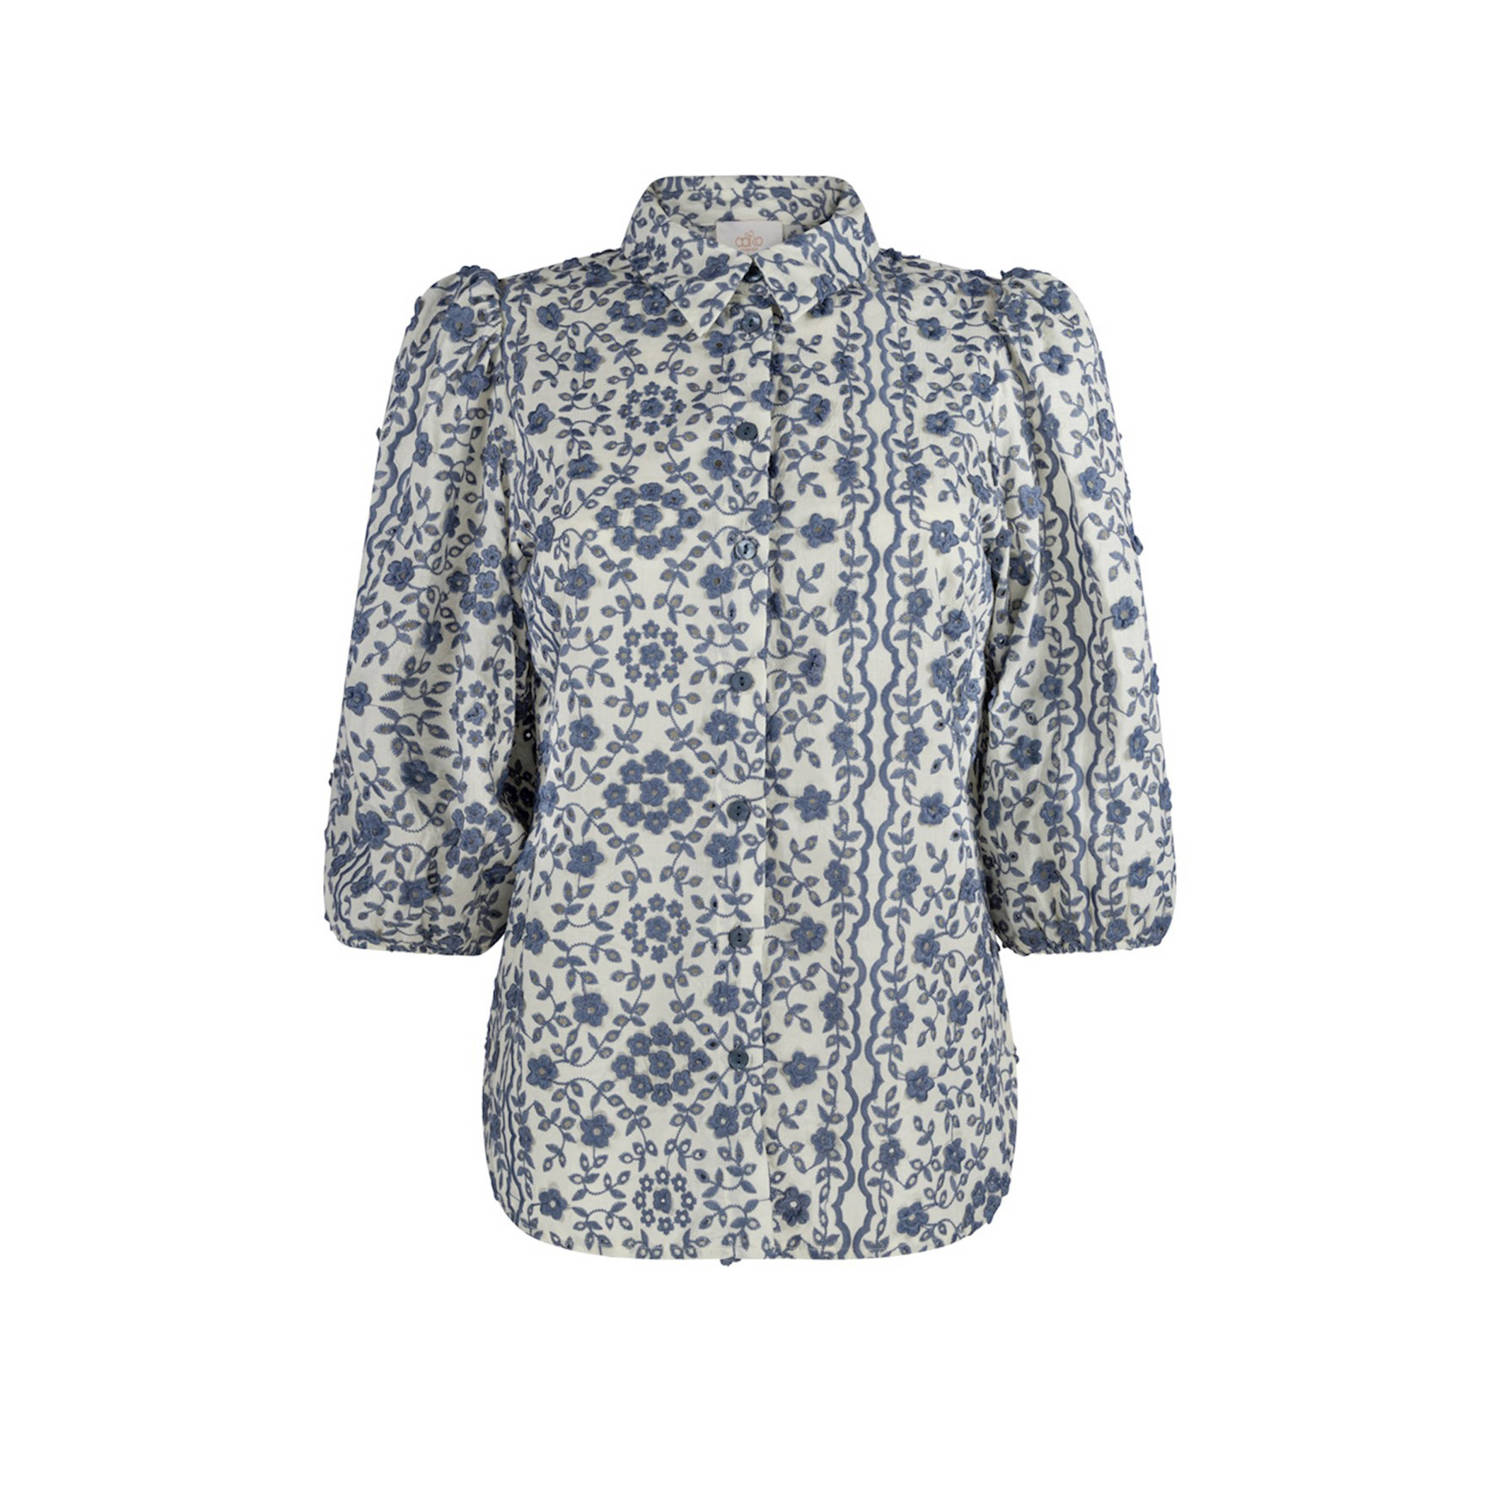 Aaiko blouse met all over print blauw creme